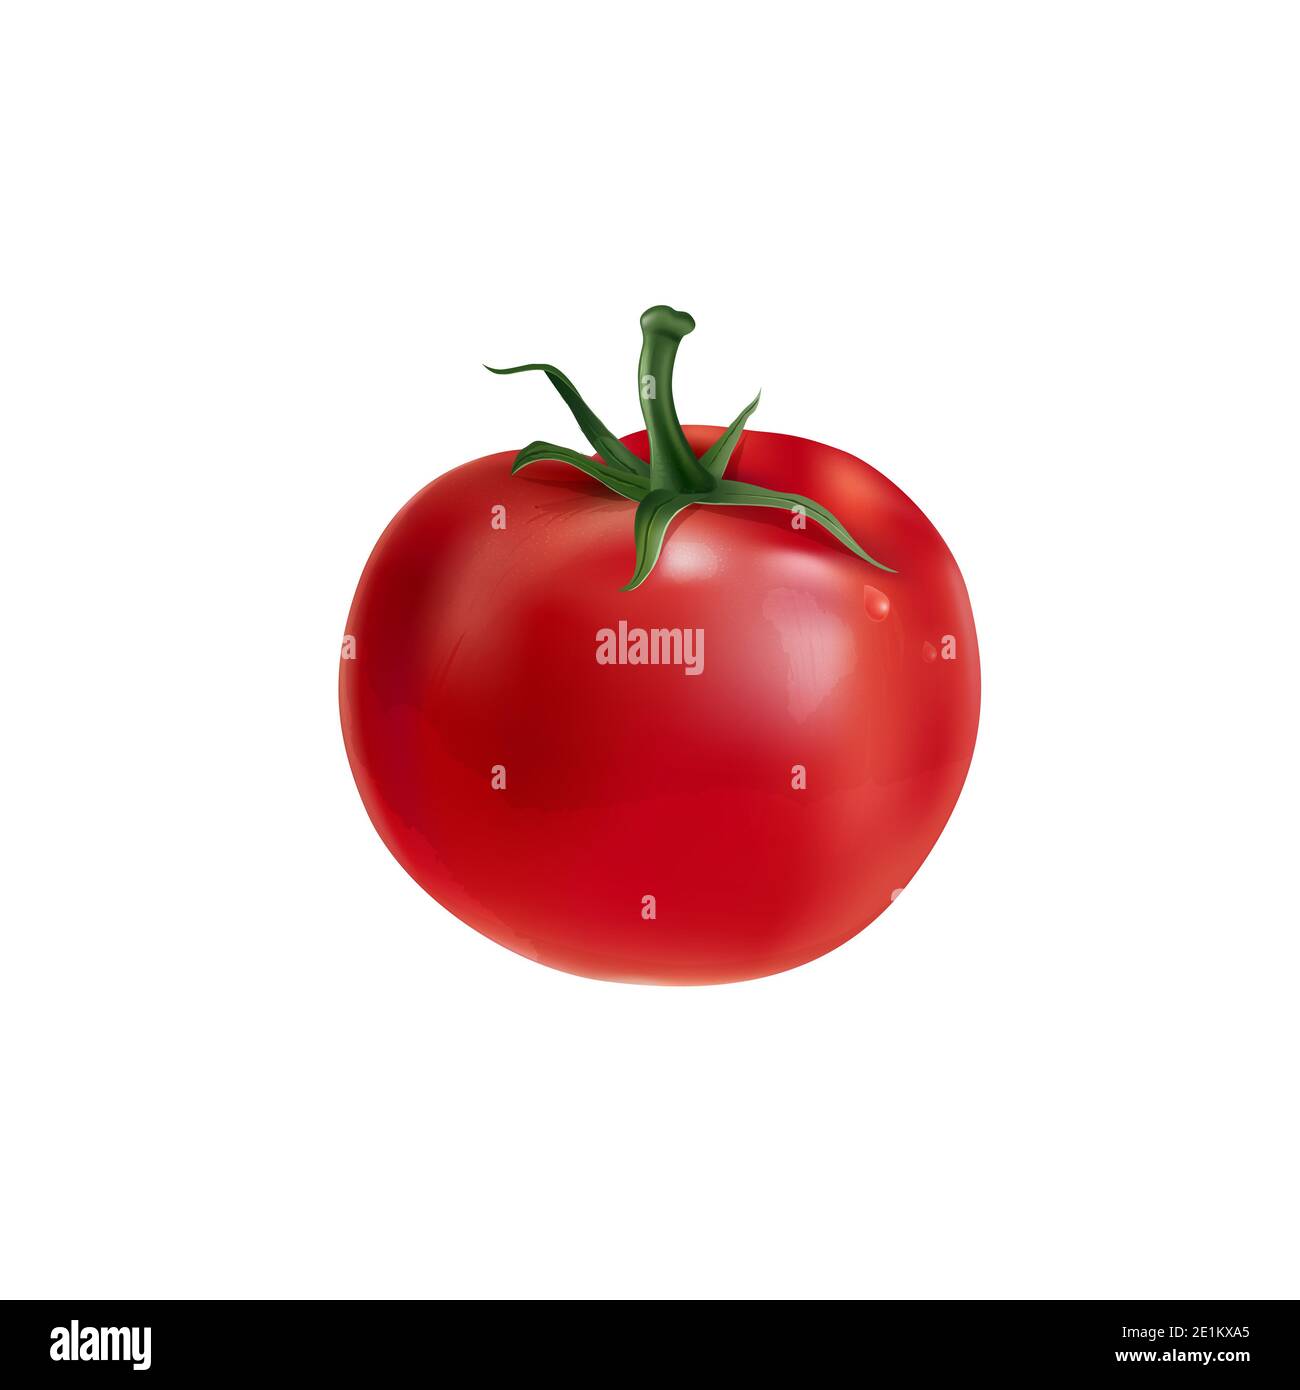 Fresh red tomato on a white background. Stock Photo